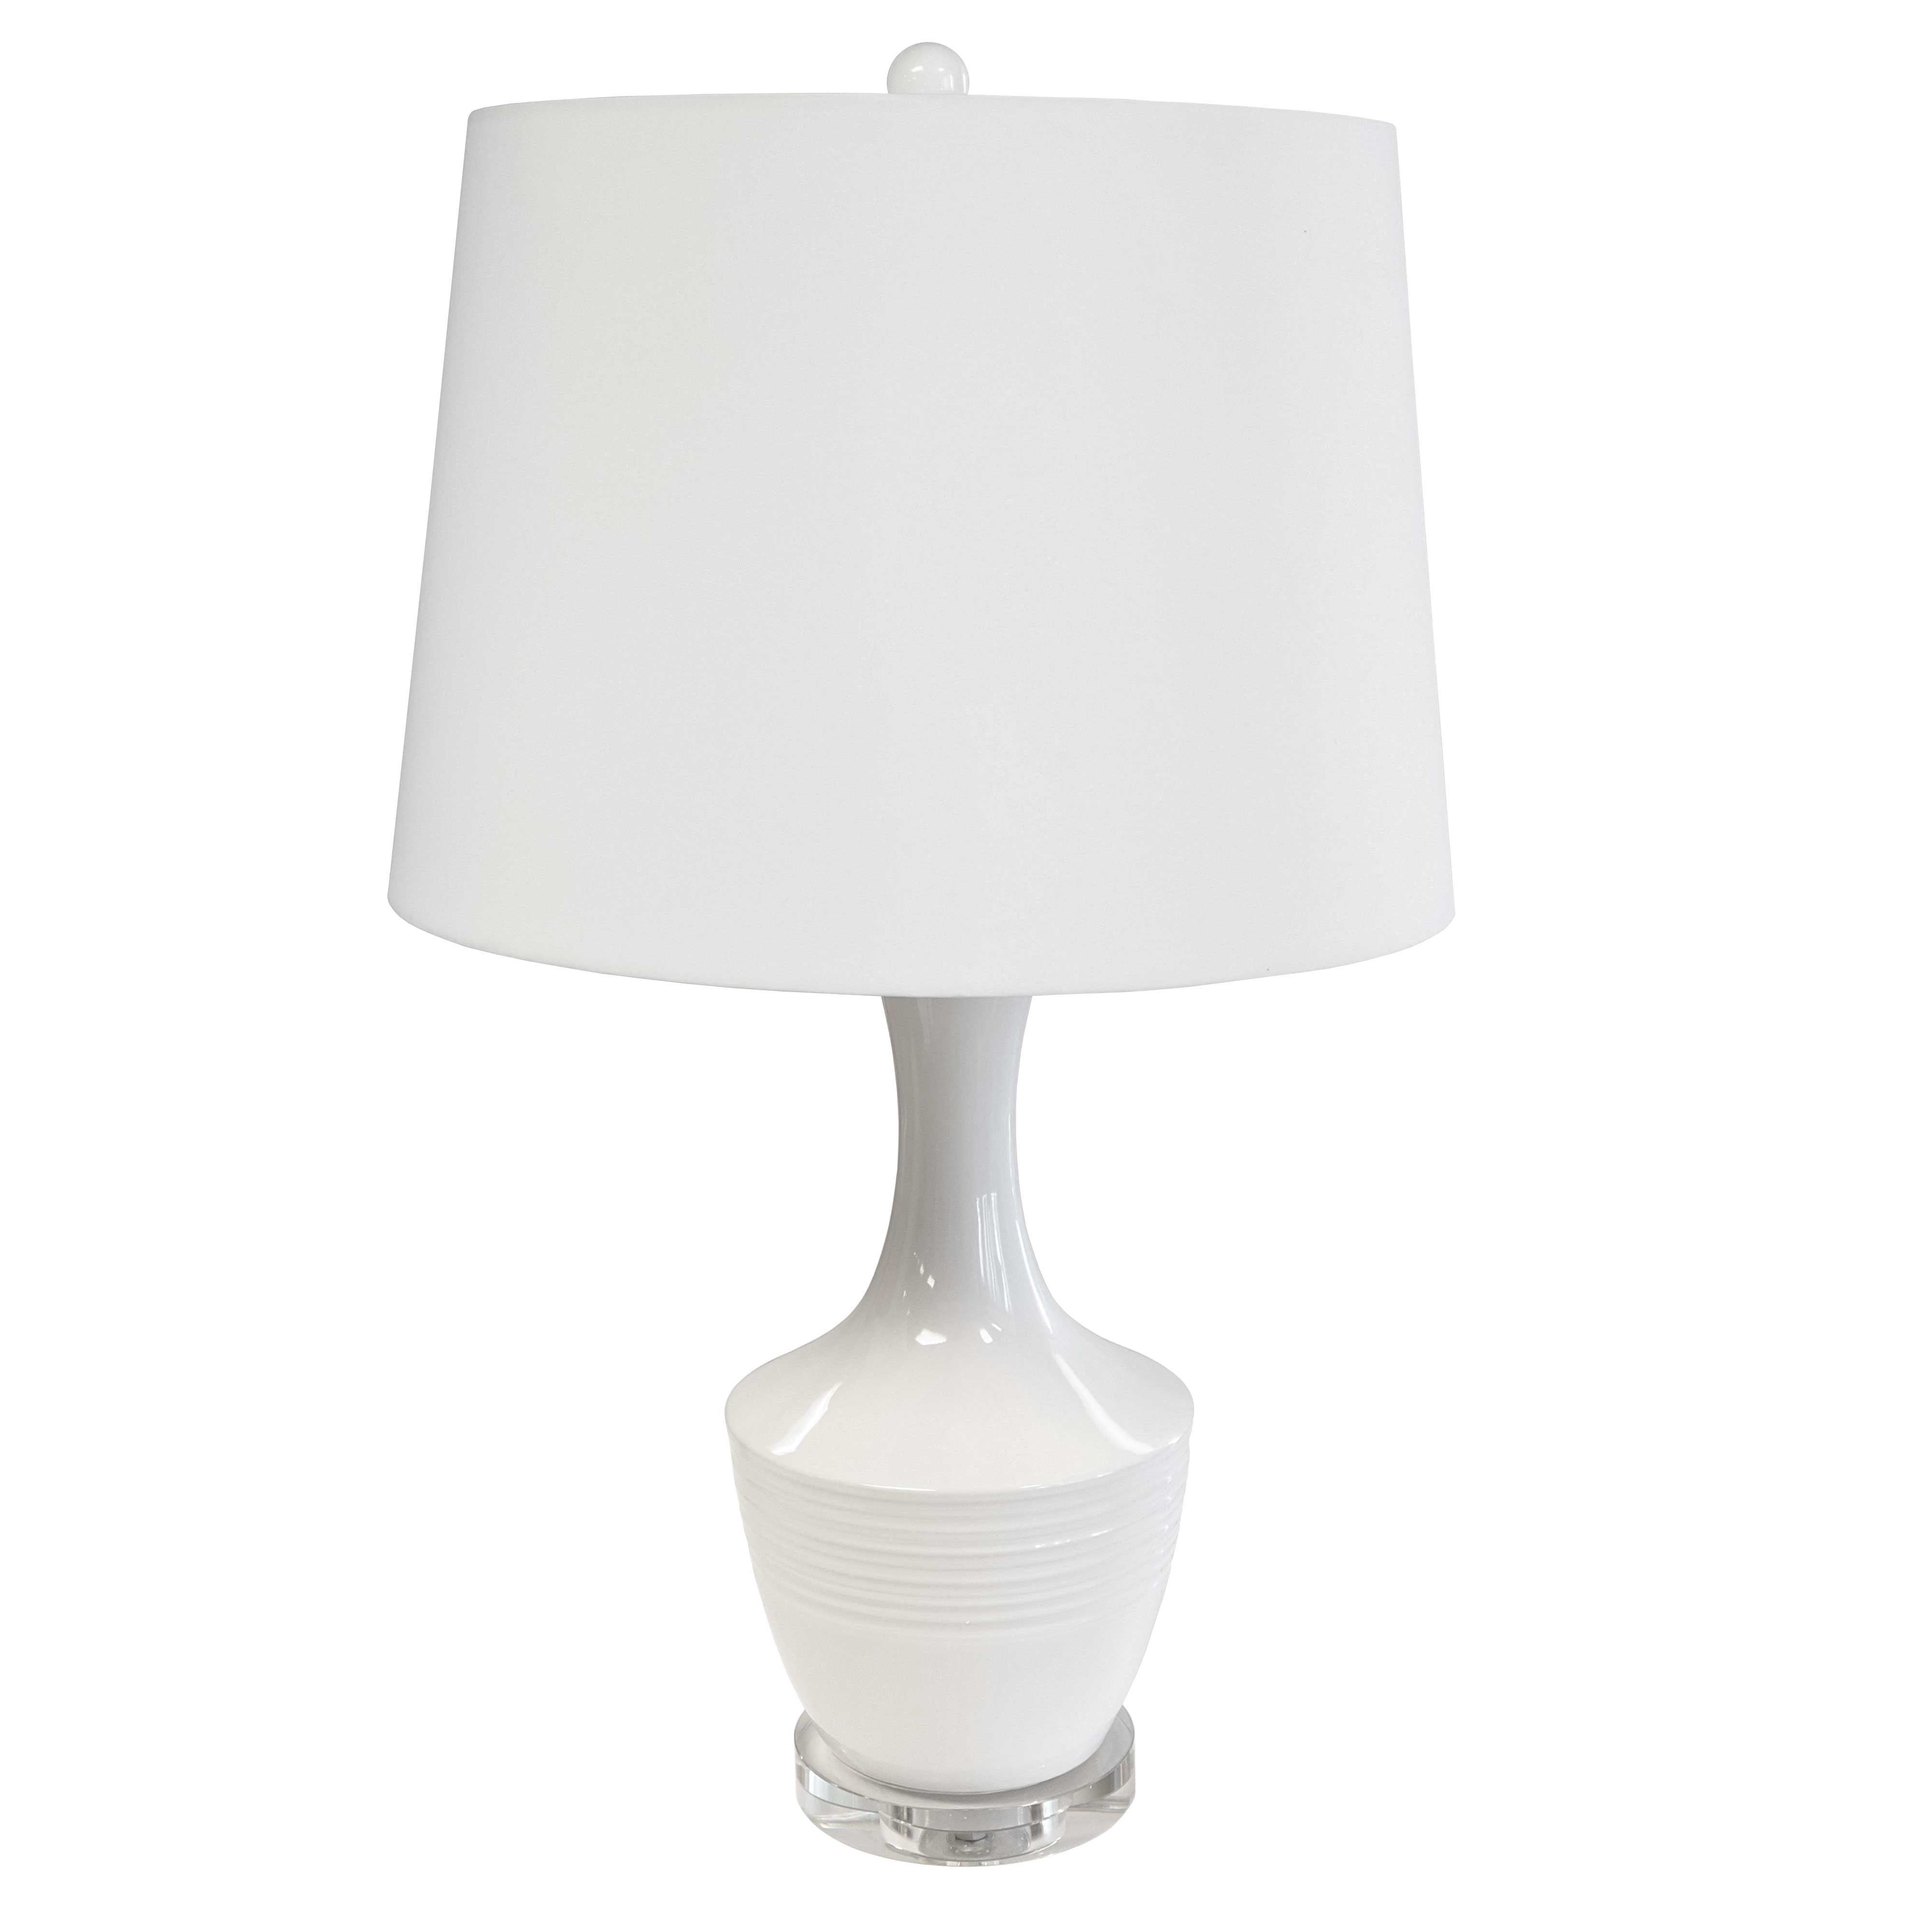 GOLIATH Table lamp White - GOL-271T-WH | DAINOLITE